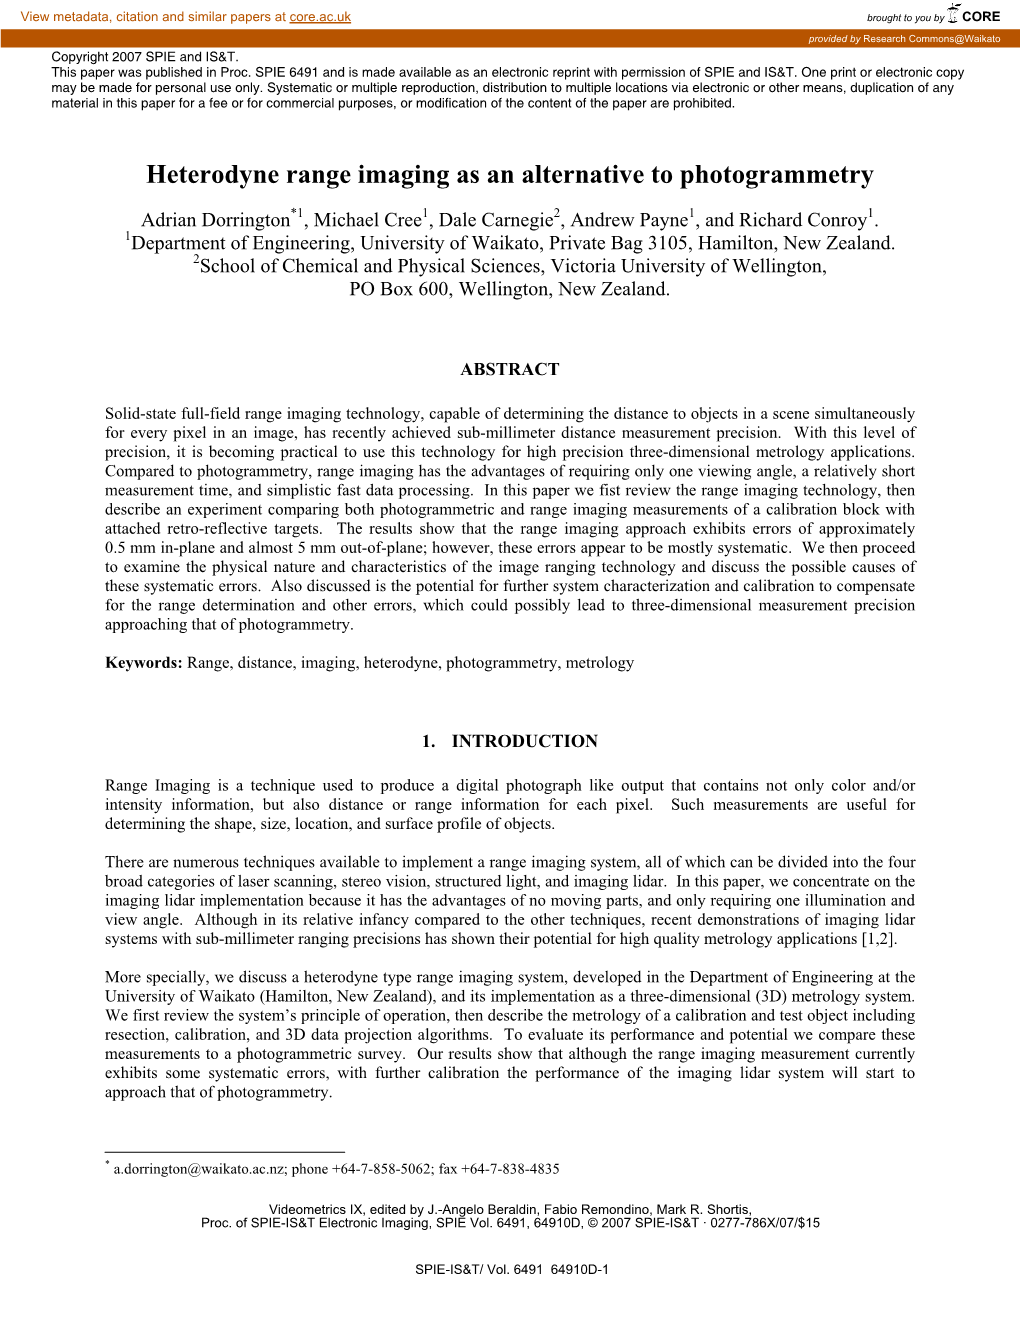 Heterodyne Range Imaging As an Alternative to Photogrammetry